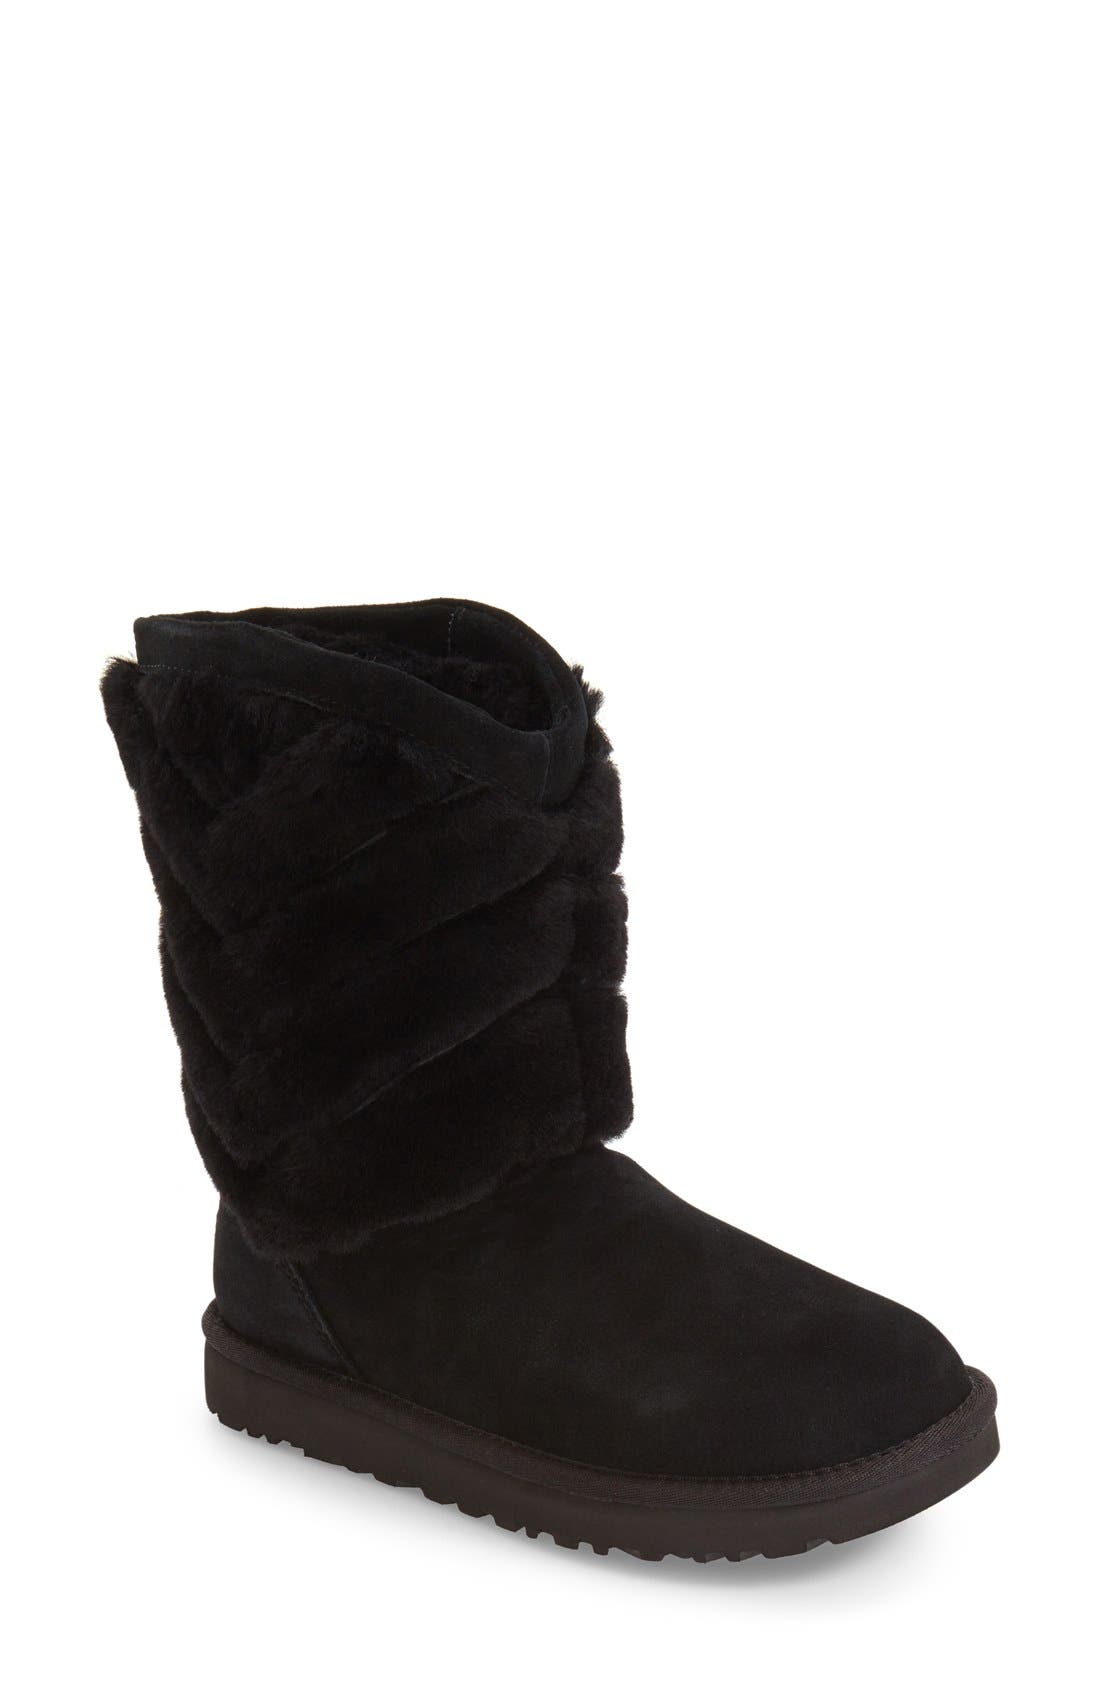 tania ugg boots black